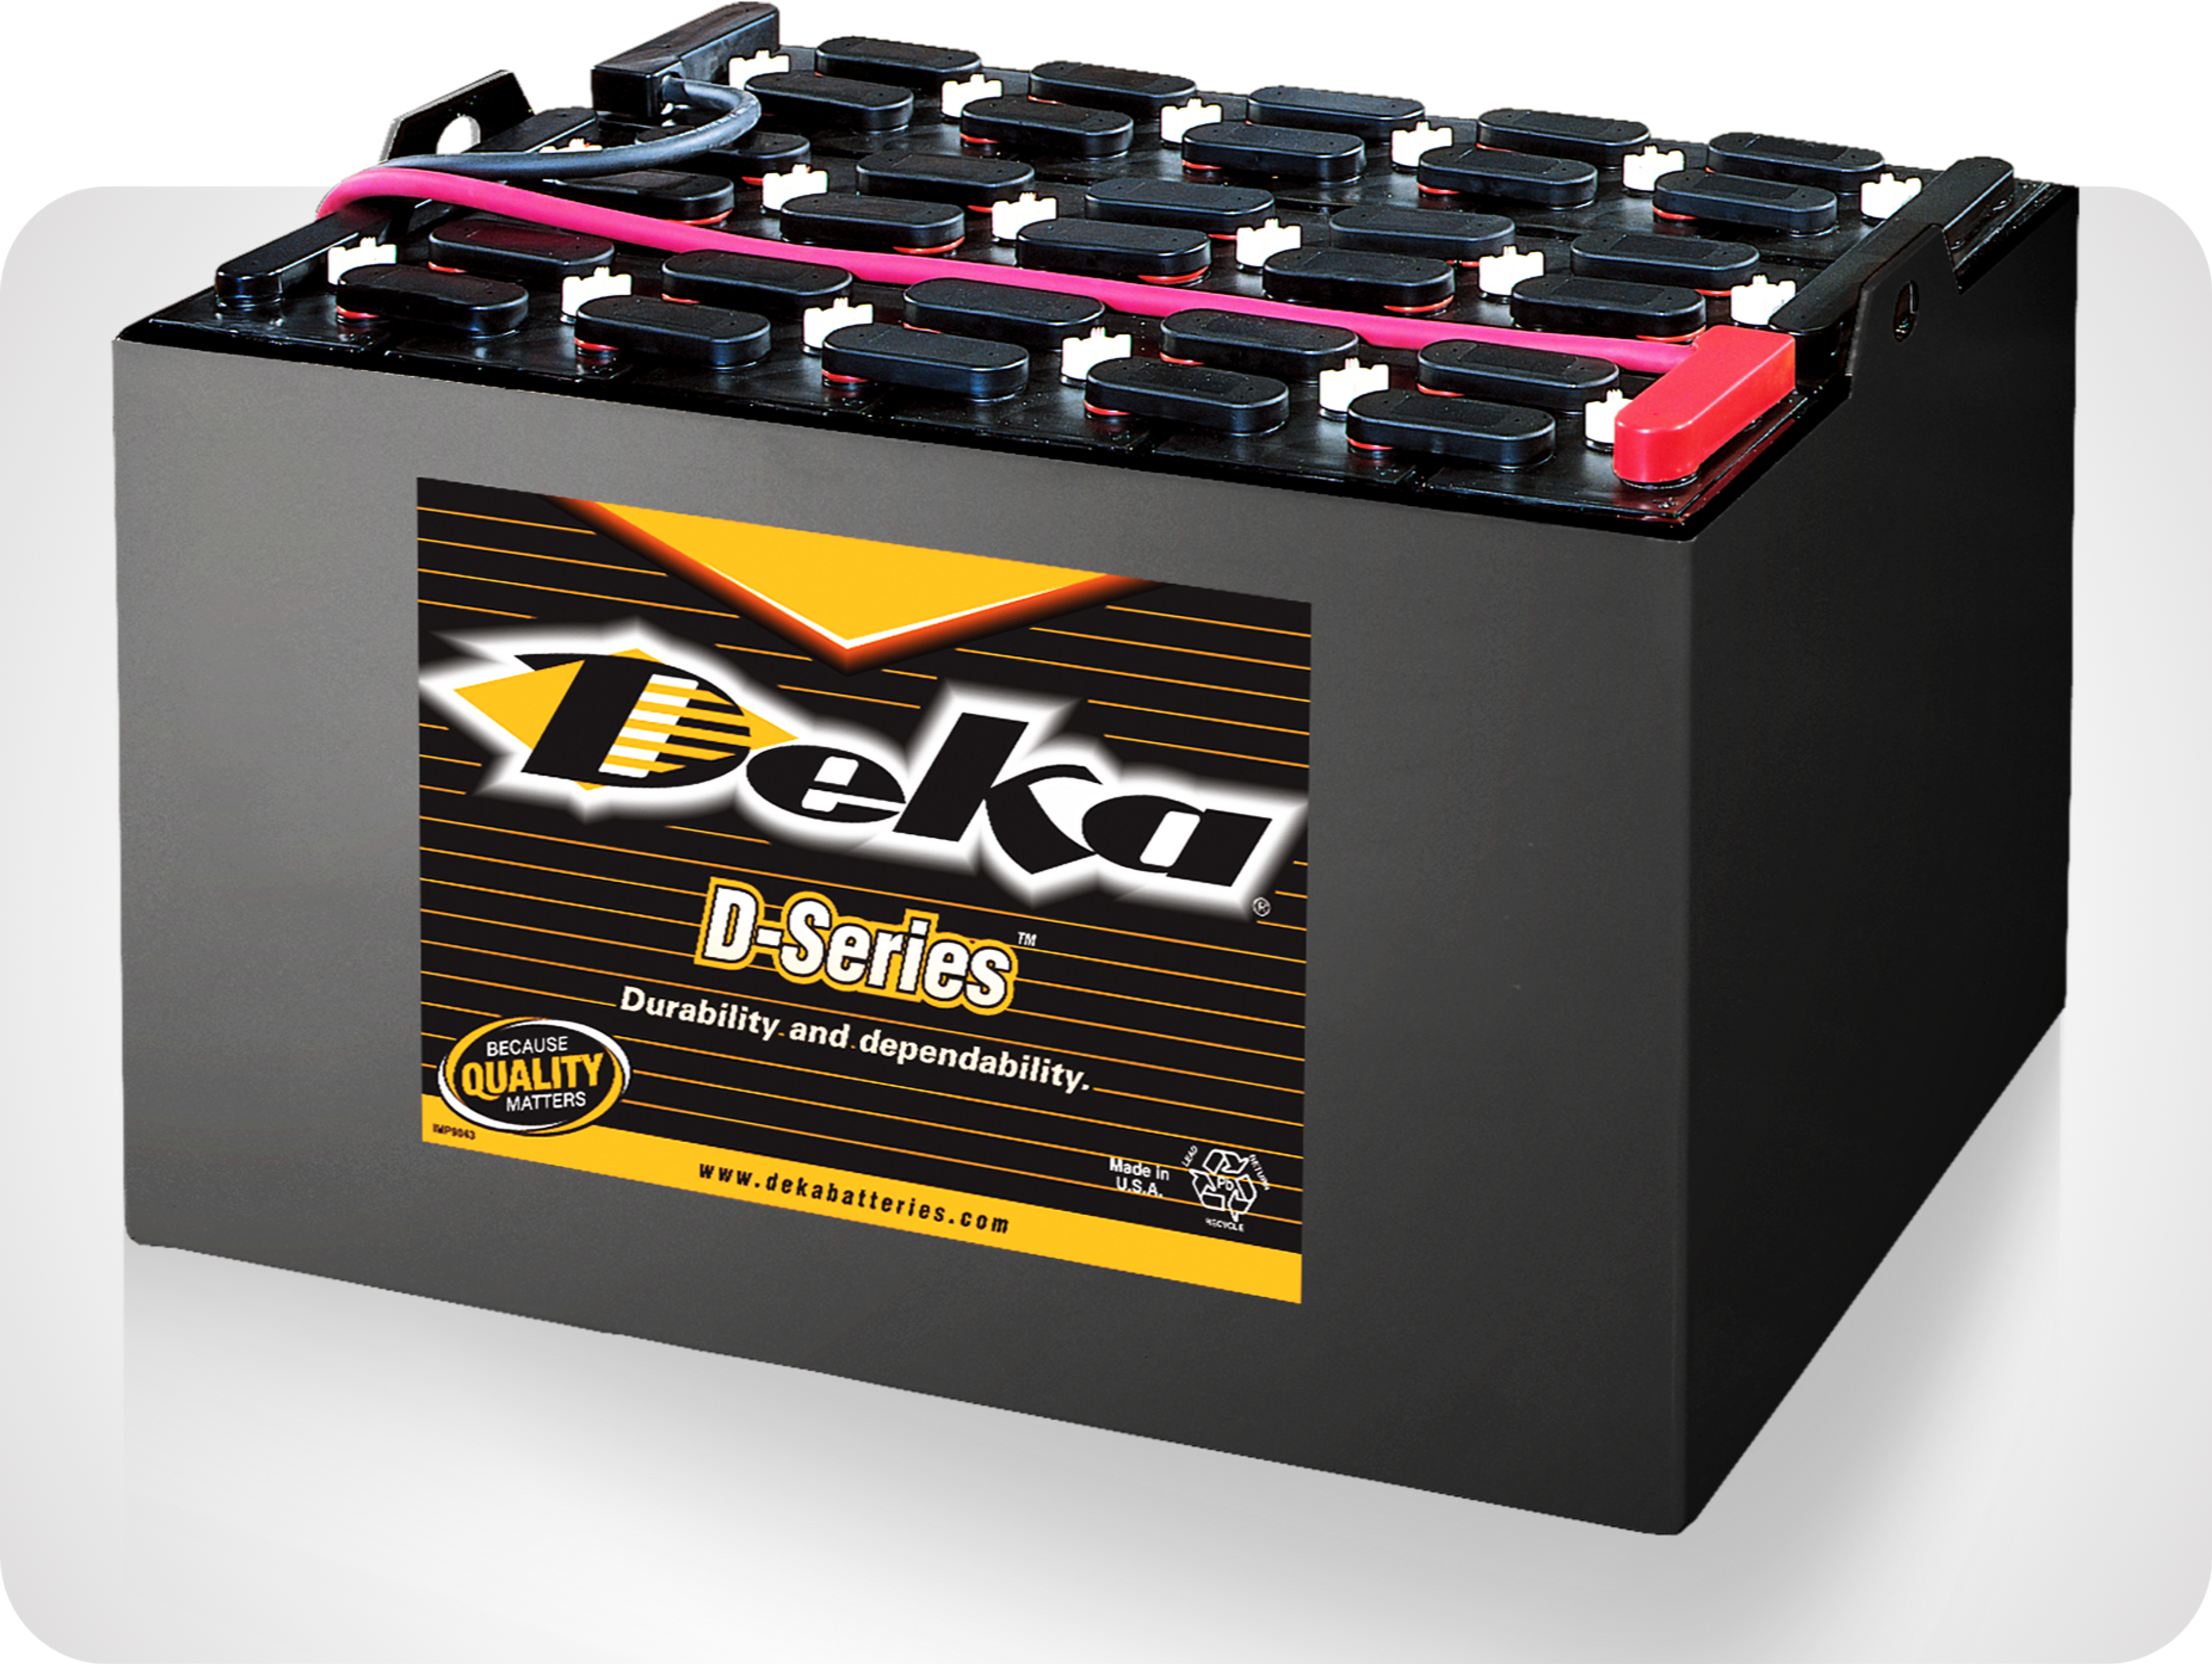 Picture of single East Penn brand premium Deka D-Series Material Handling Batteries battery